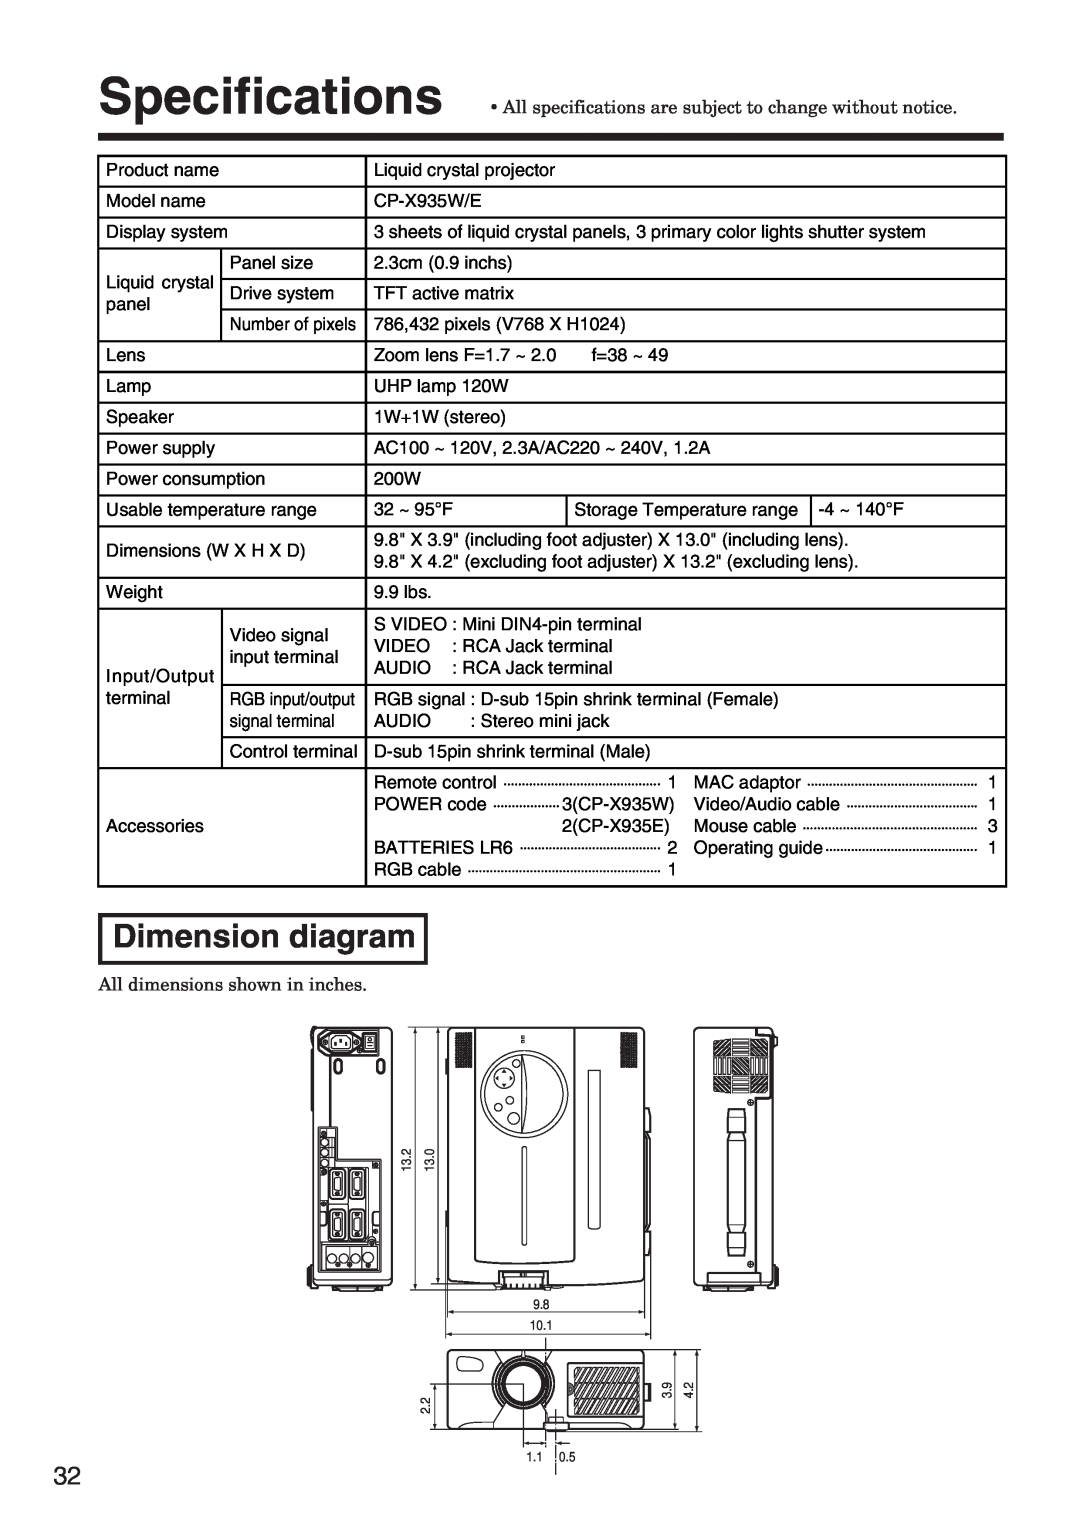 Hitachi CP-X935W specifications Dimension diagram, All dimensions shown in inches 